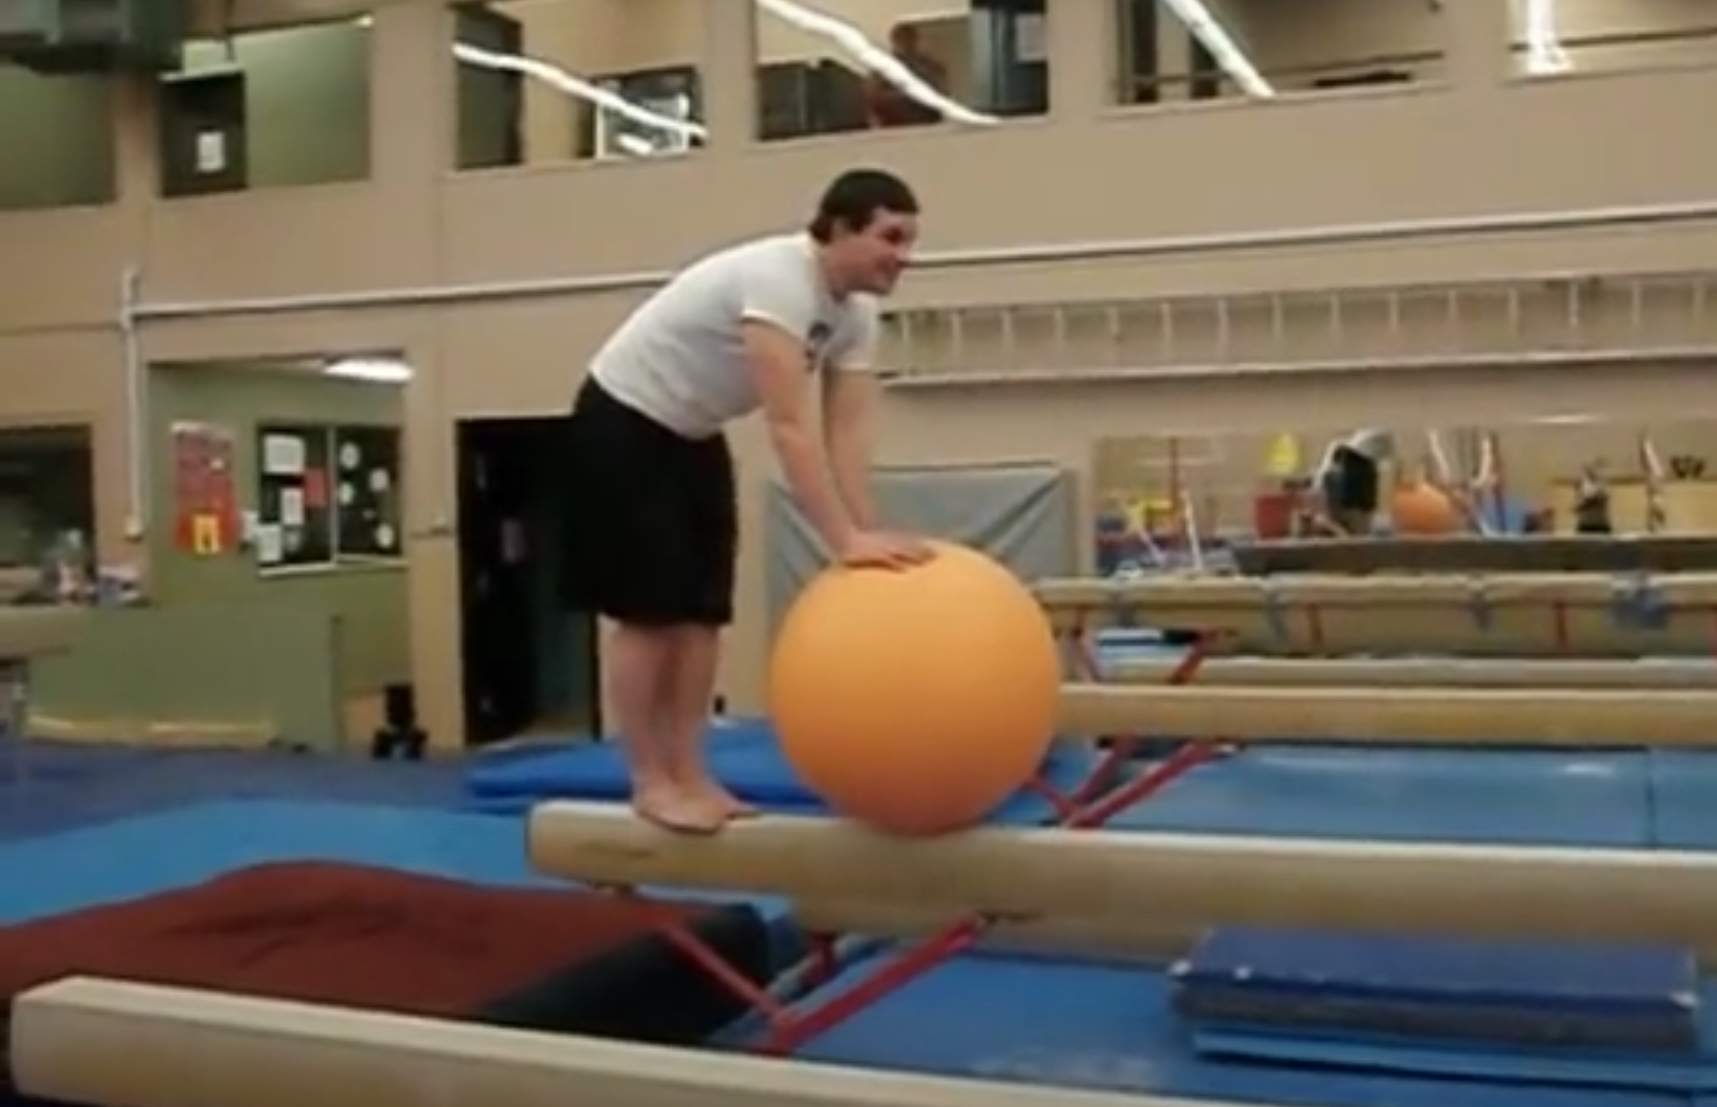 Barefoot gymnast crushes balls